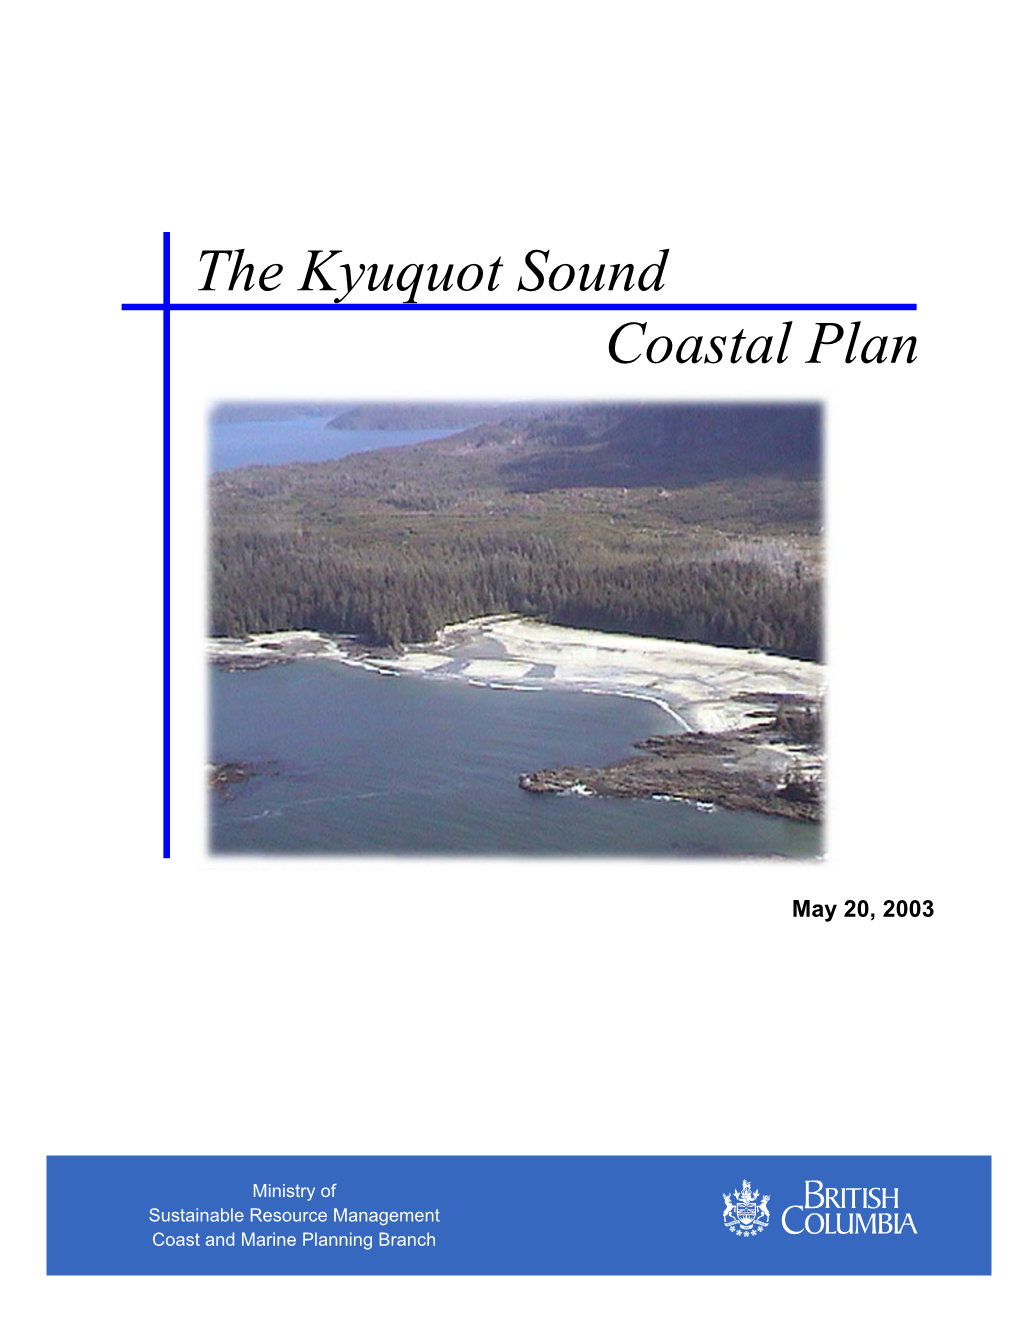 The Kyuquot Sound Coastal Plan